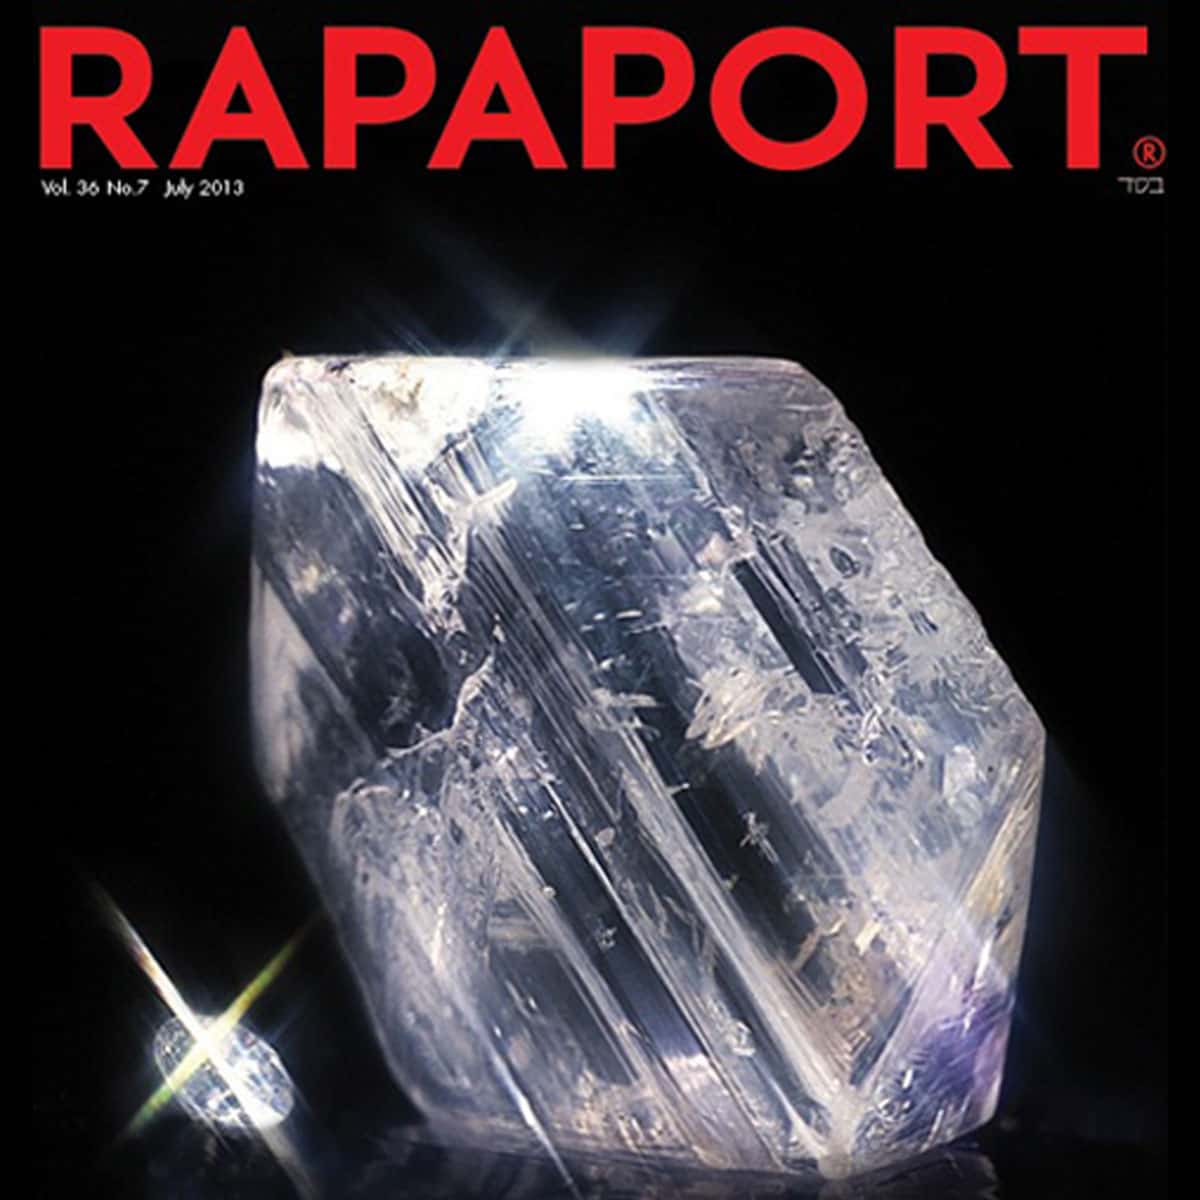 rapaport magazine